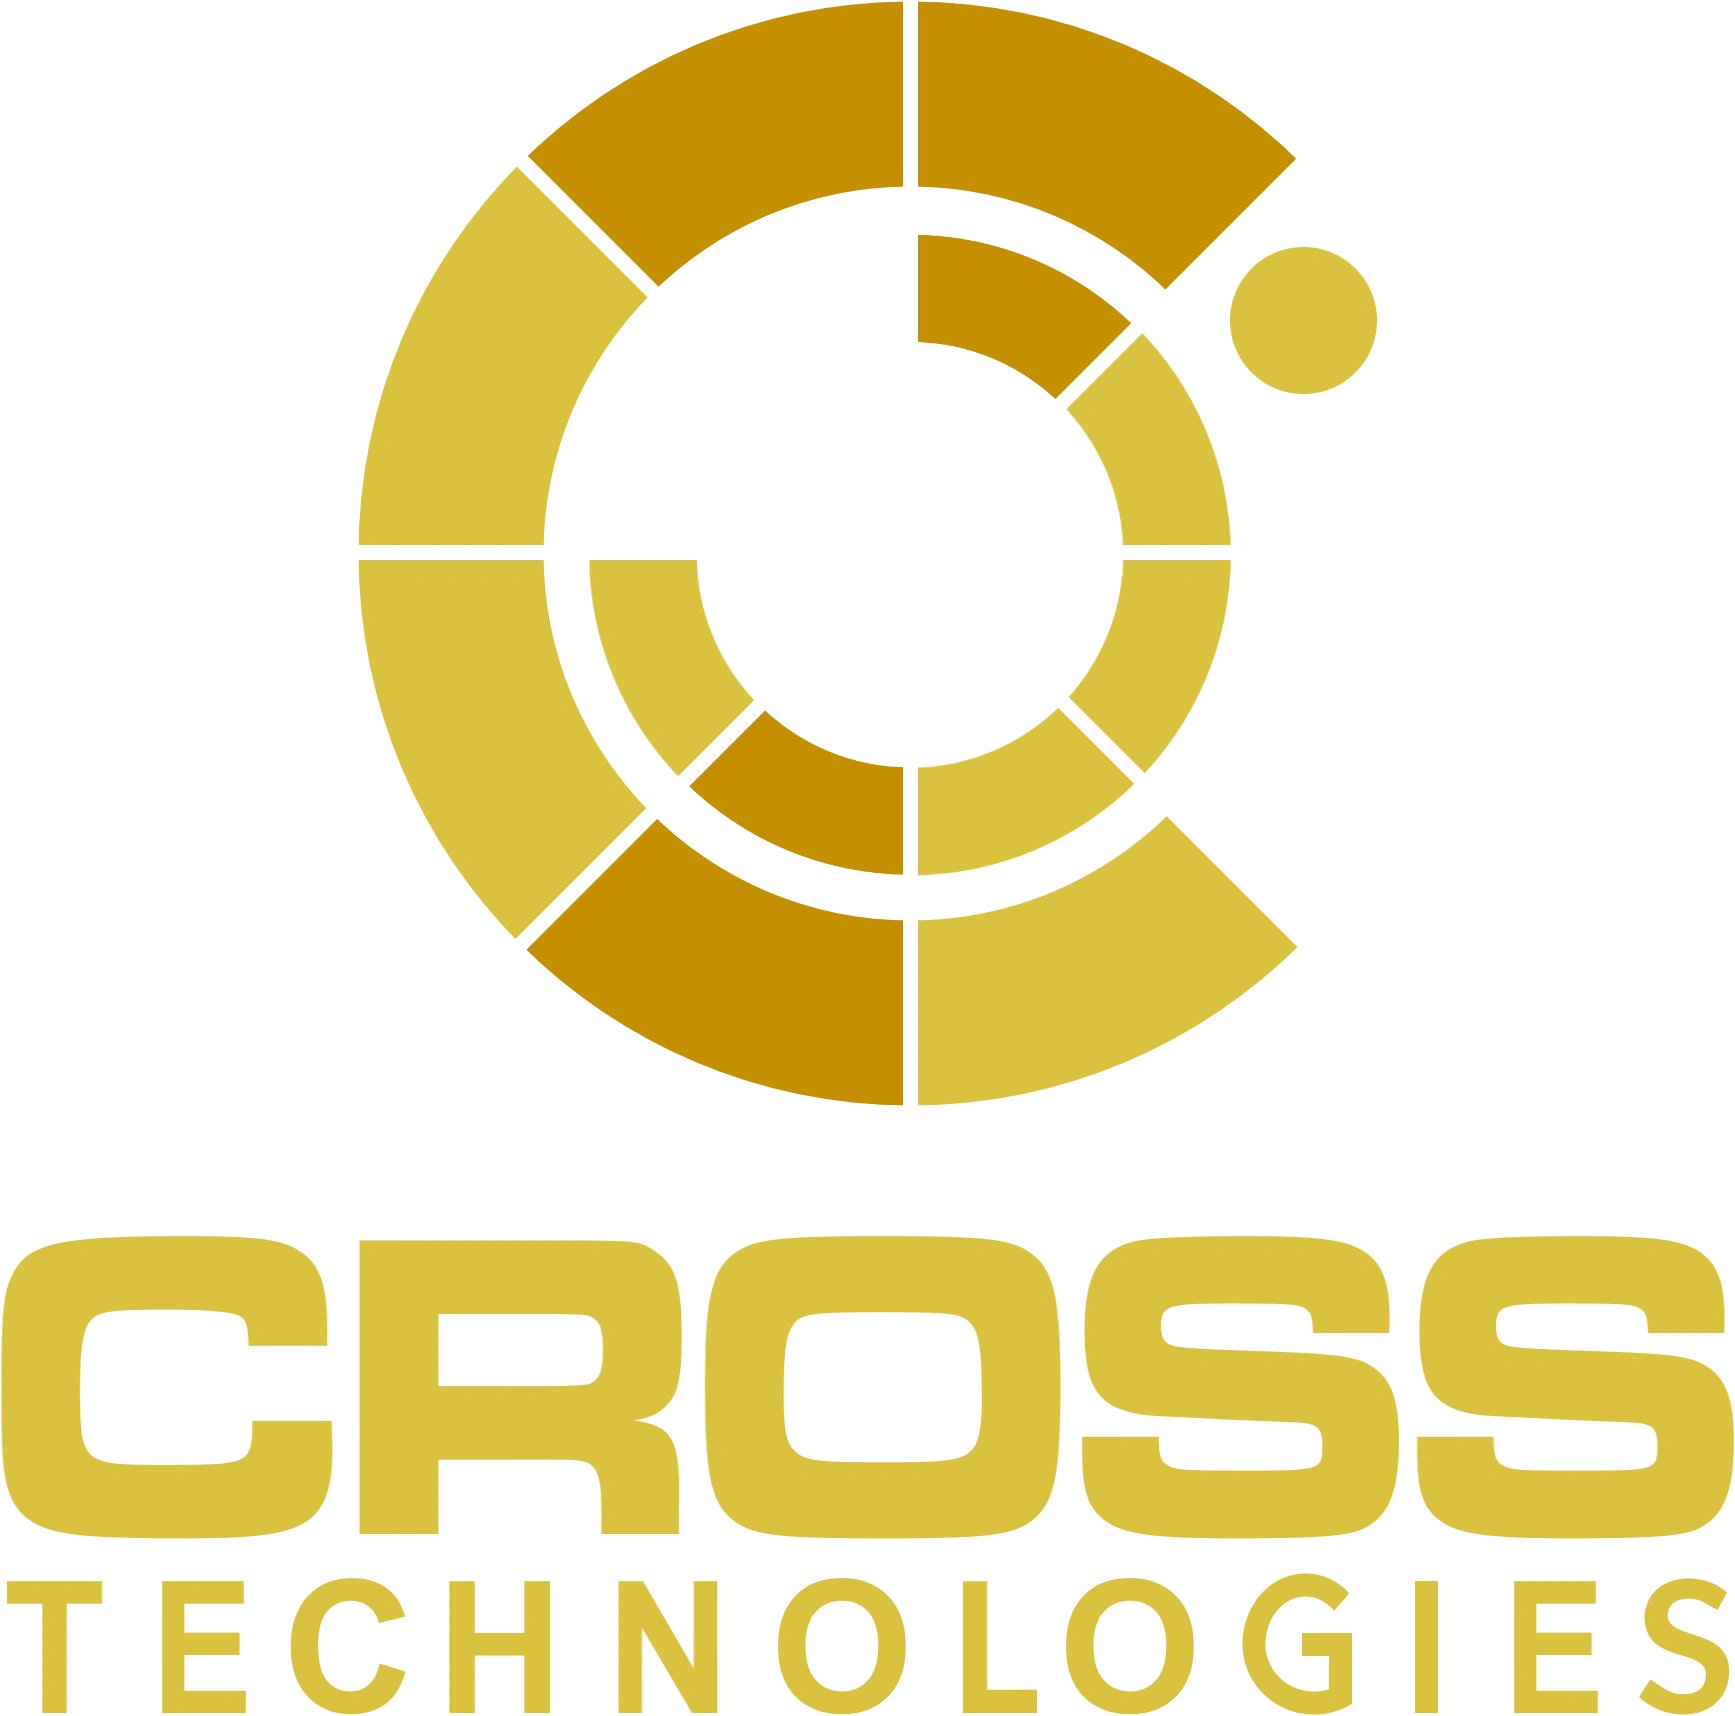 Cross Technologies